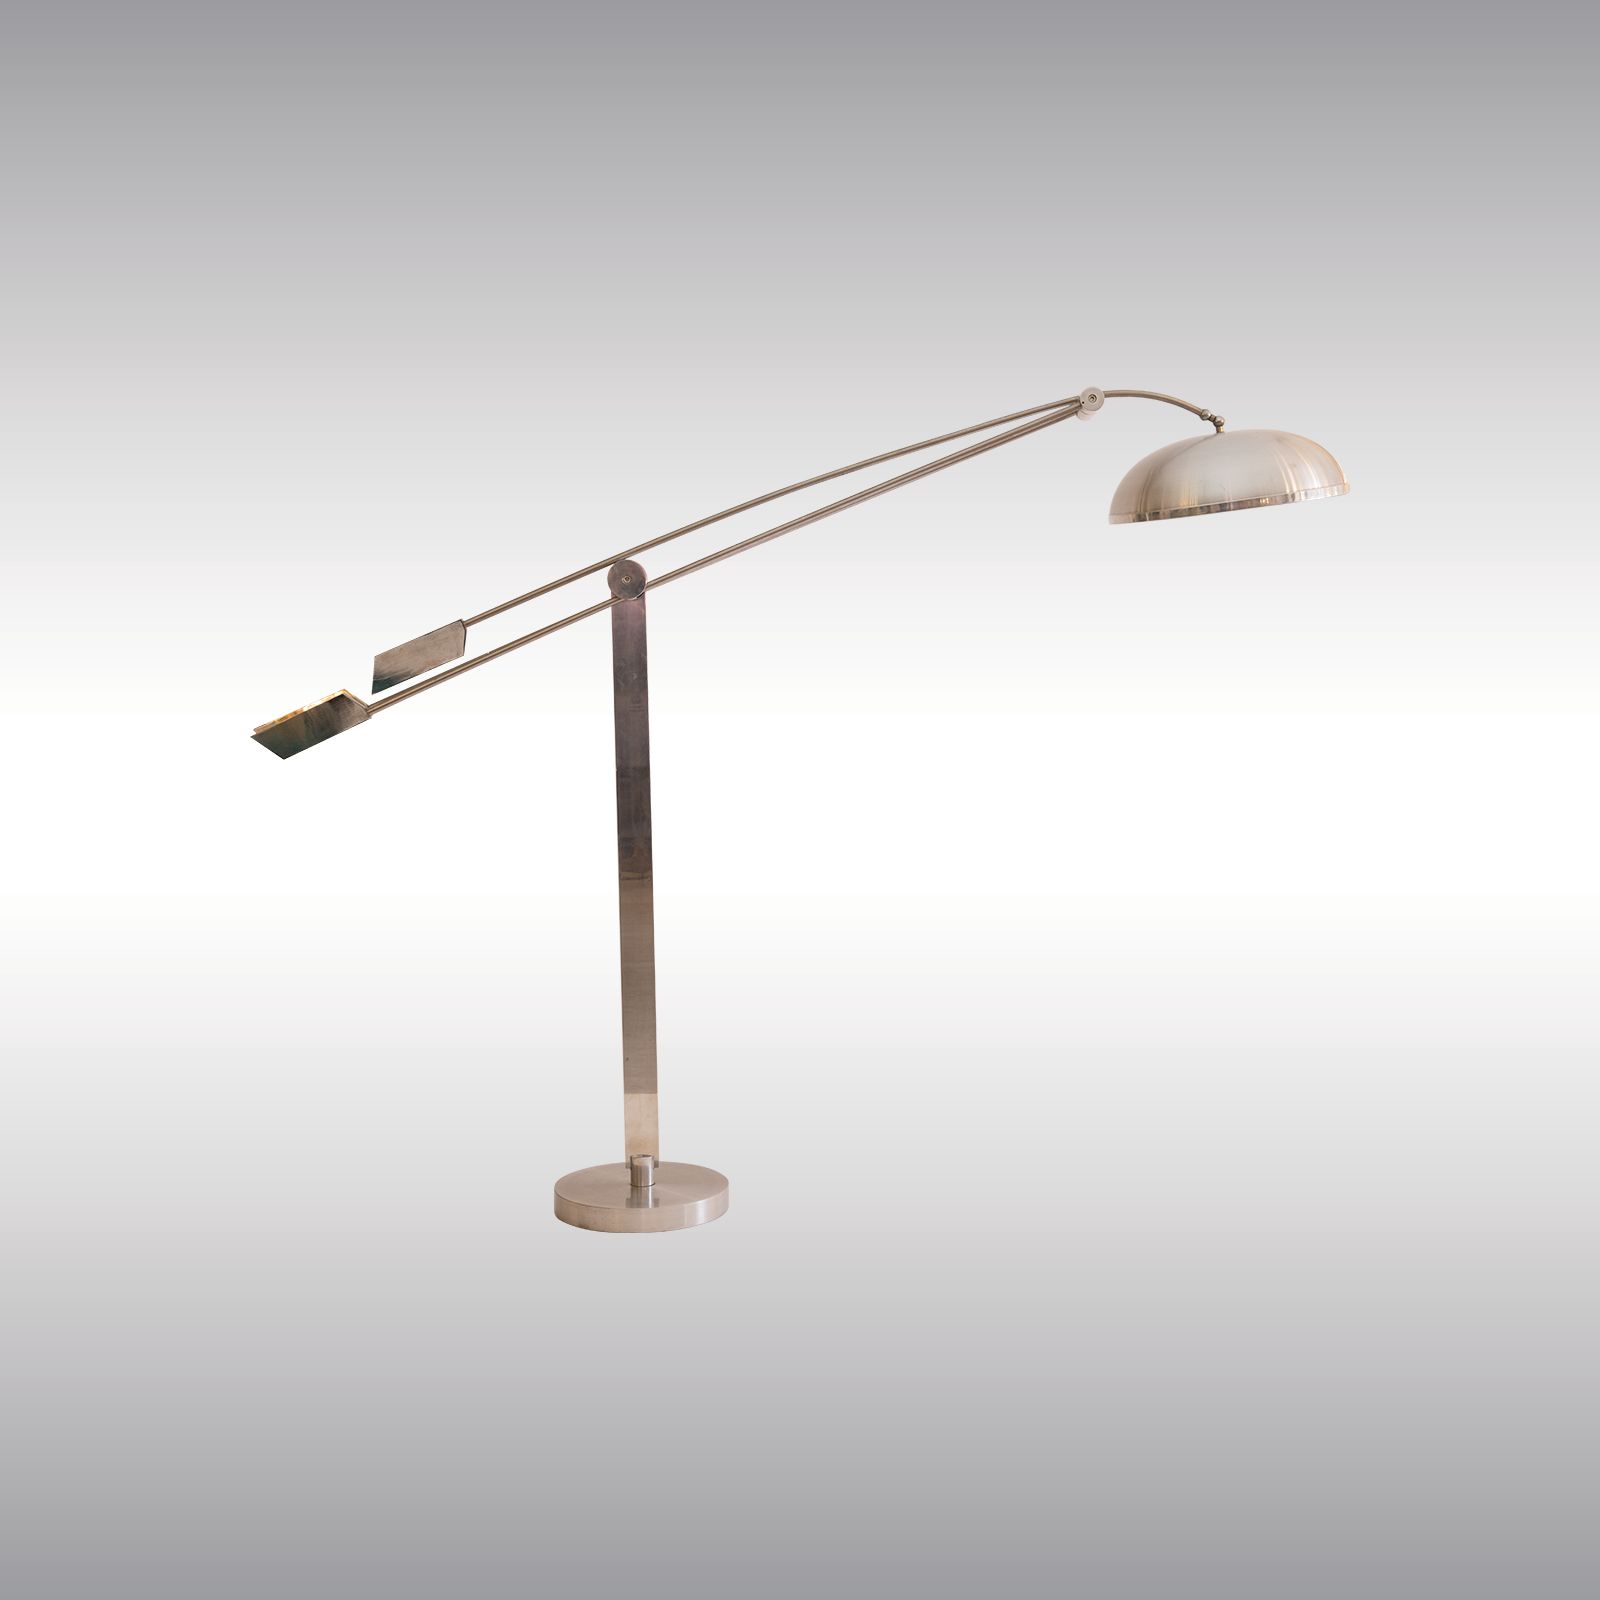 WOKA LAMPS VIENNA - OrderNr.: 50061|Bauhaus Style Floor Lamp, Machine Age - Design: Machine Age Period